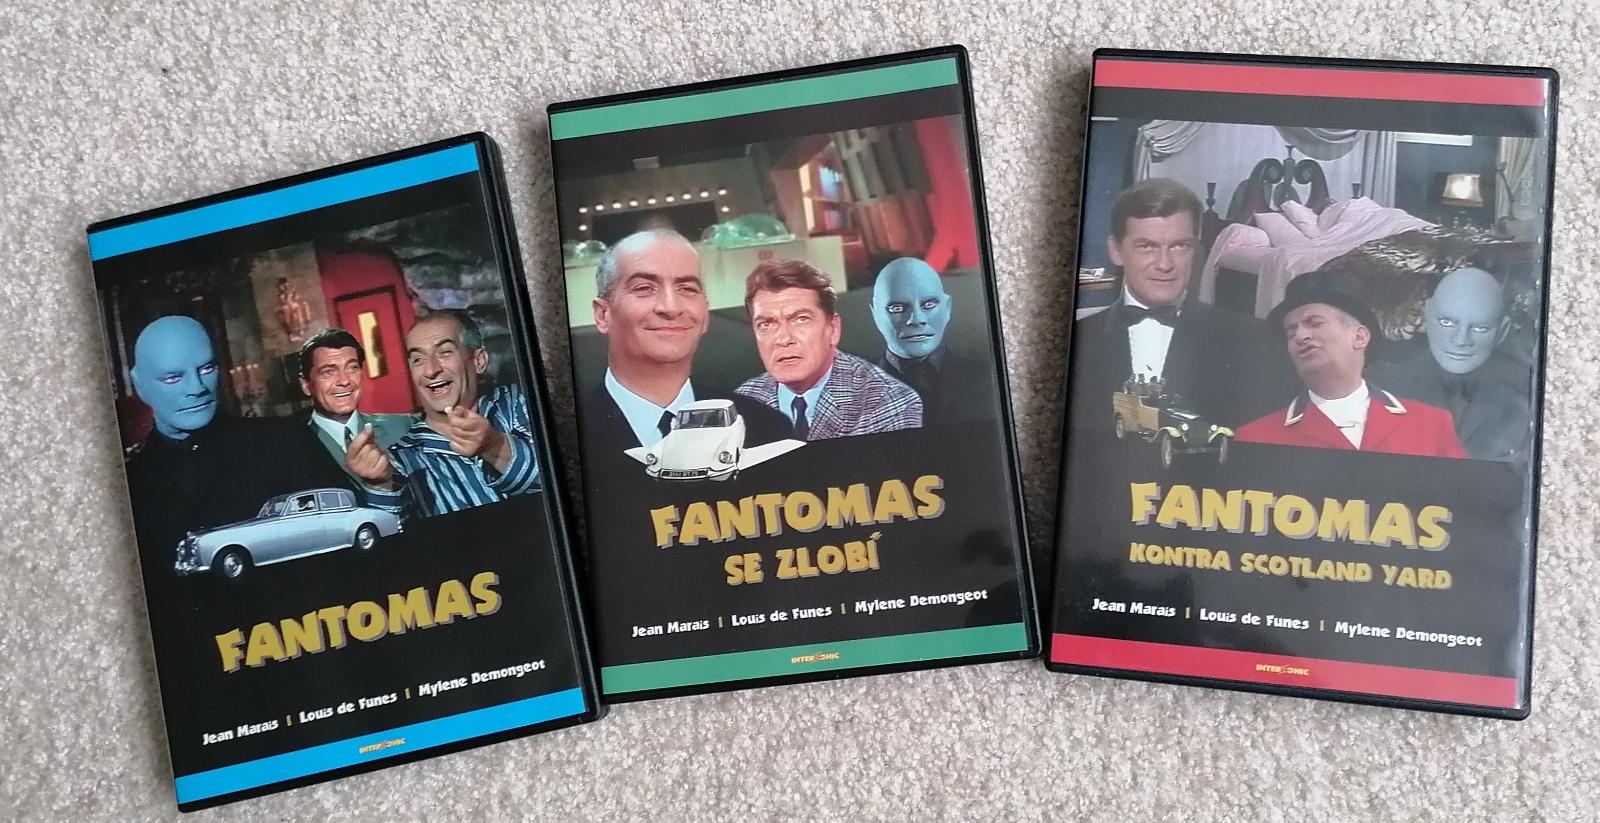 FANTOMAS, Fantomas sa hnevá, Fantomas Kontra Scotland Yard - 3 DVD - Film